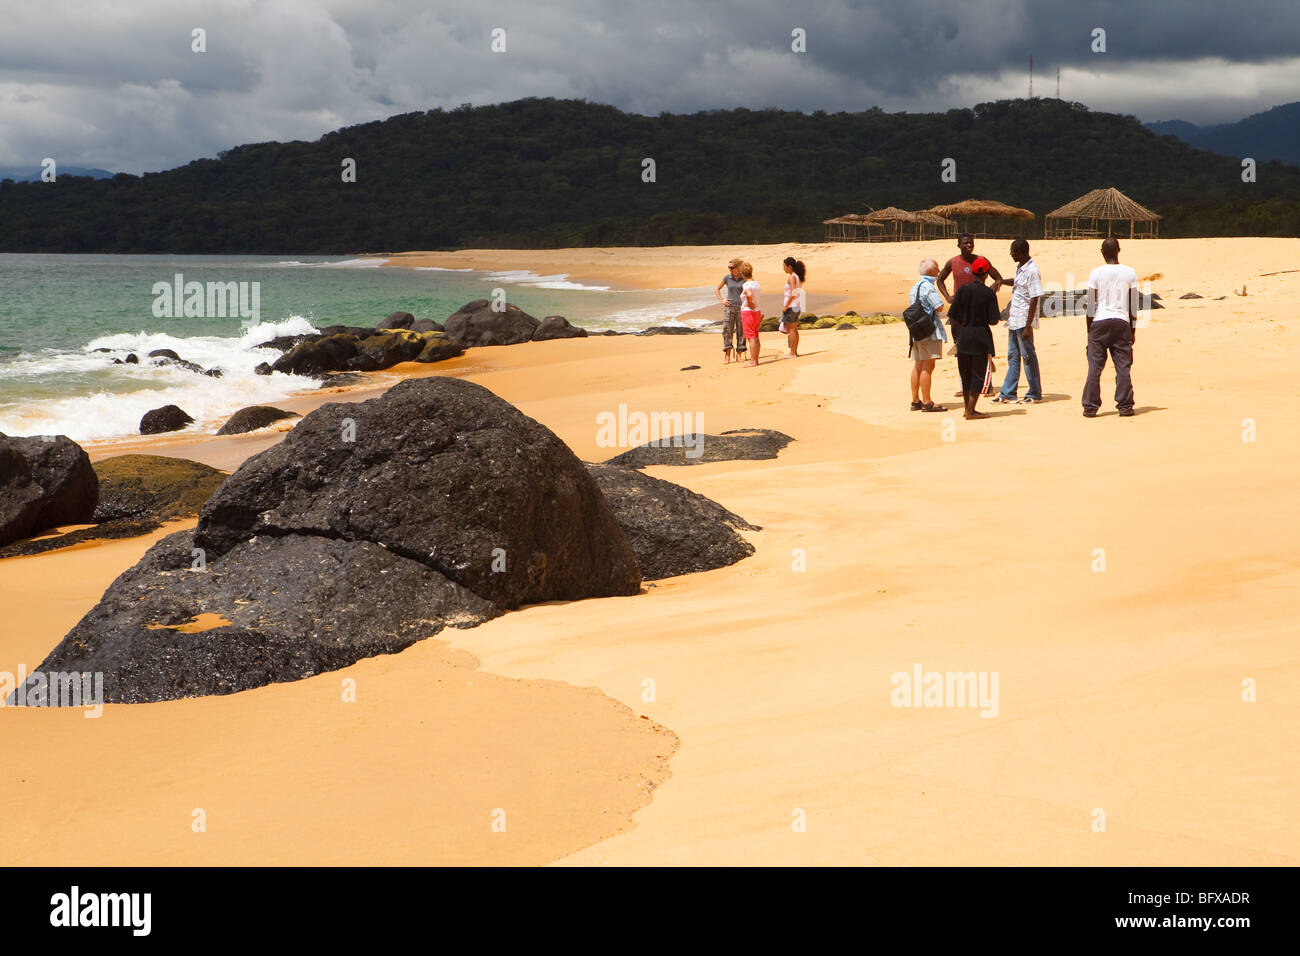 Tourists on John Obey Beach, Sierra Leone Stock Photo